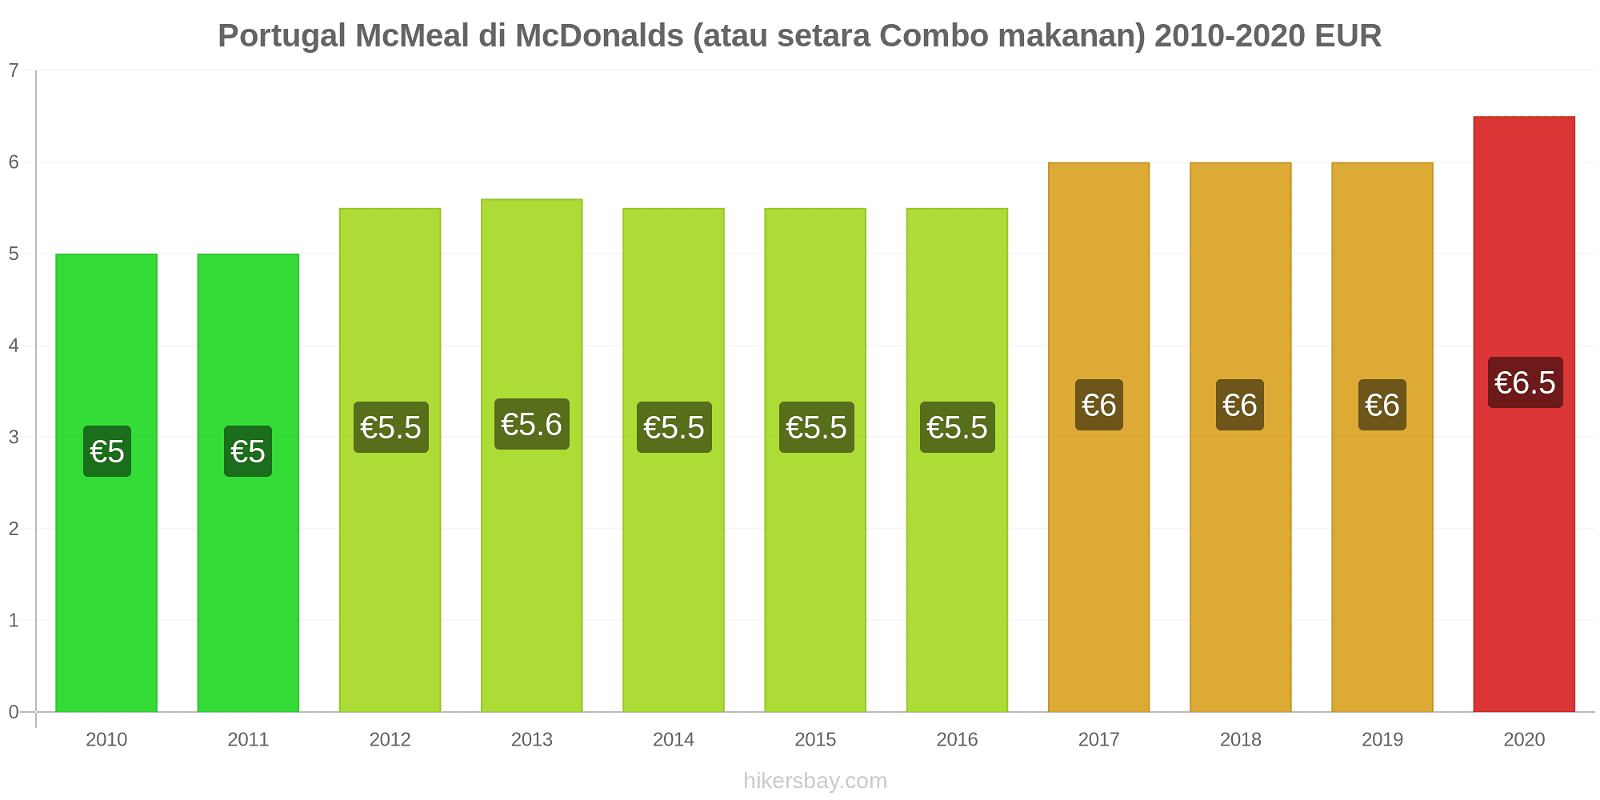 Portugal perubahan harga McMeal di McDonalds (atau setara Combo makanan) hikersbay.com